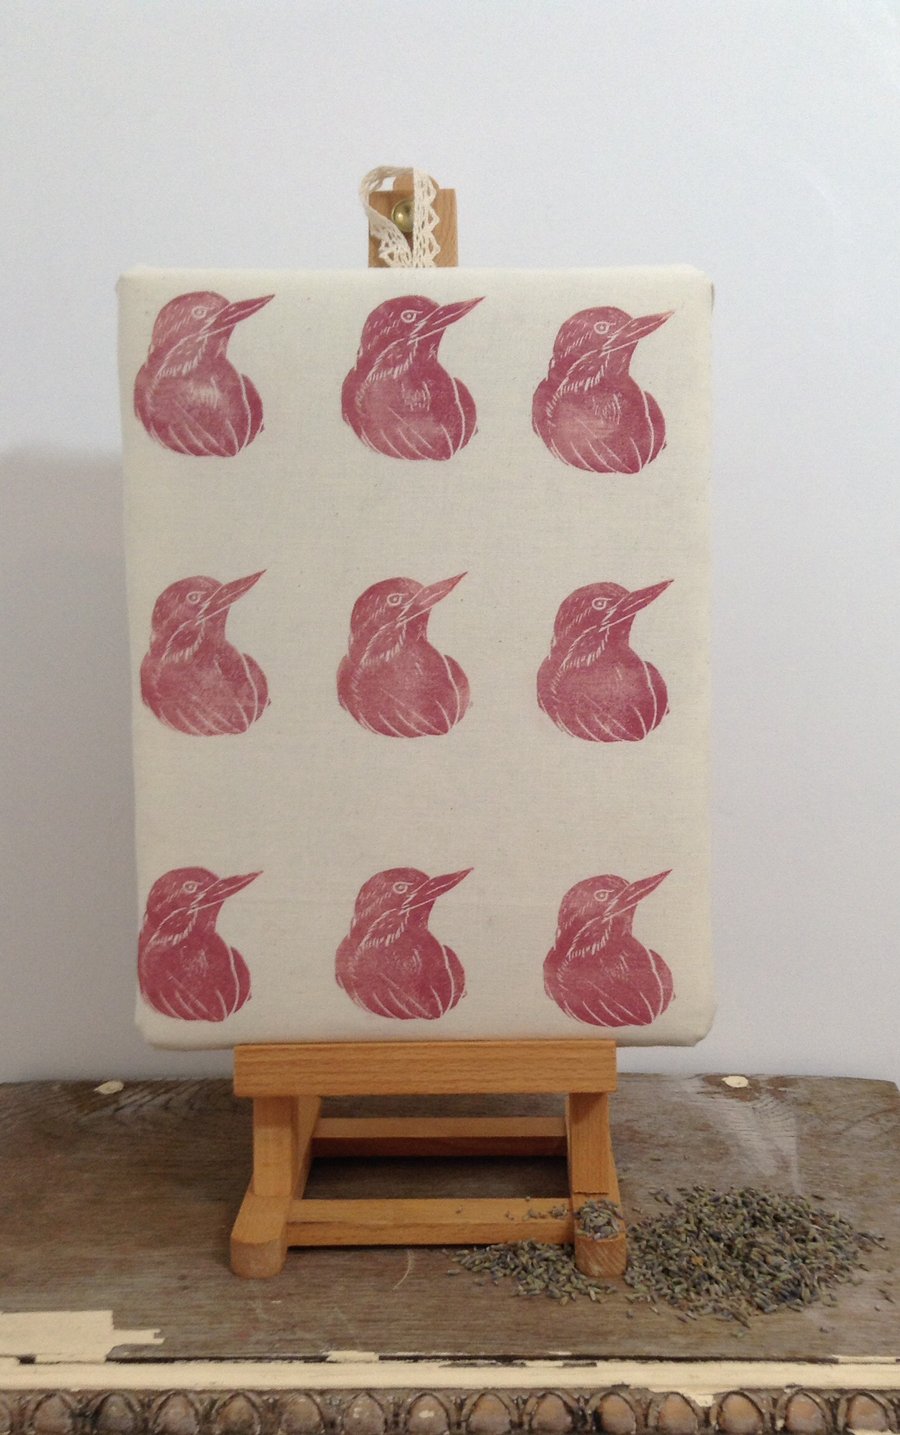 Lino printed bird artwork with lavender blossom